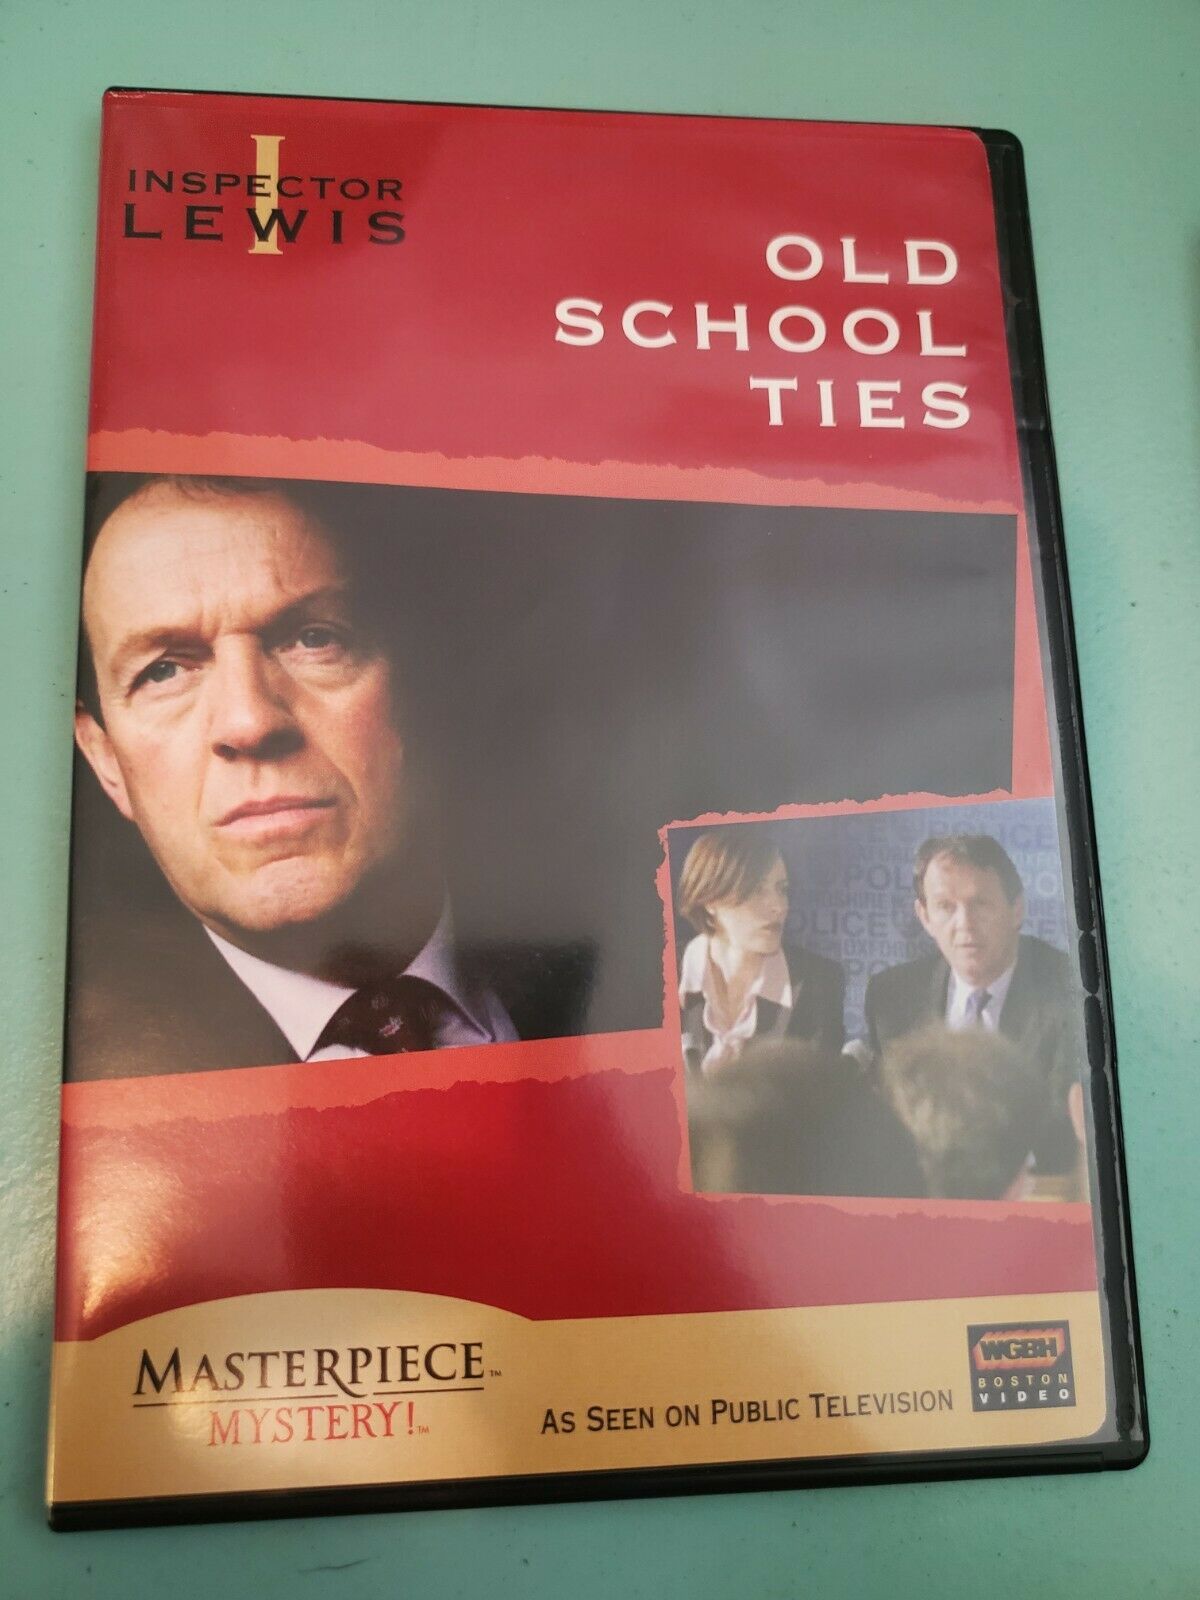 is inspector lewis season 8 on dvd